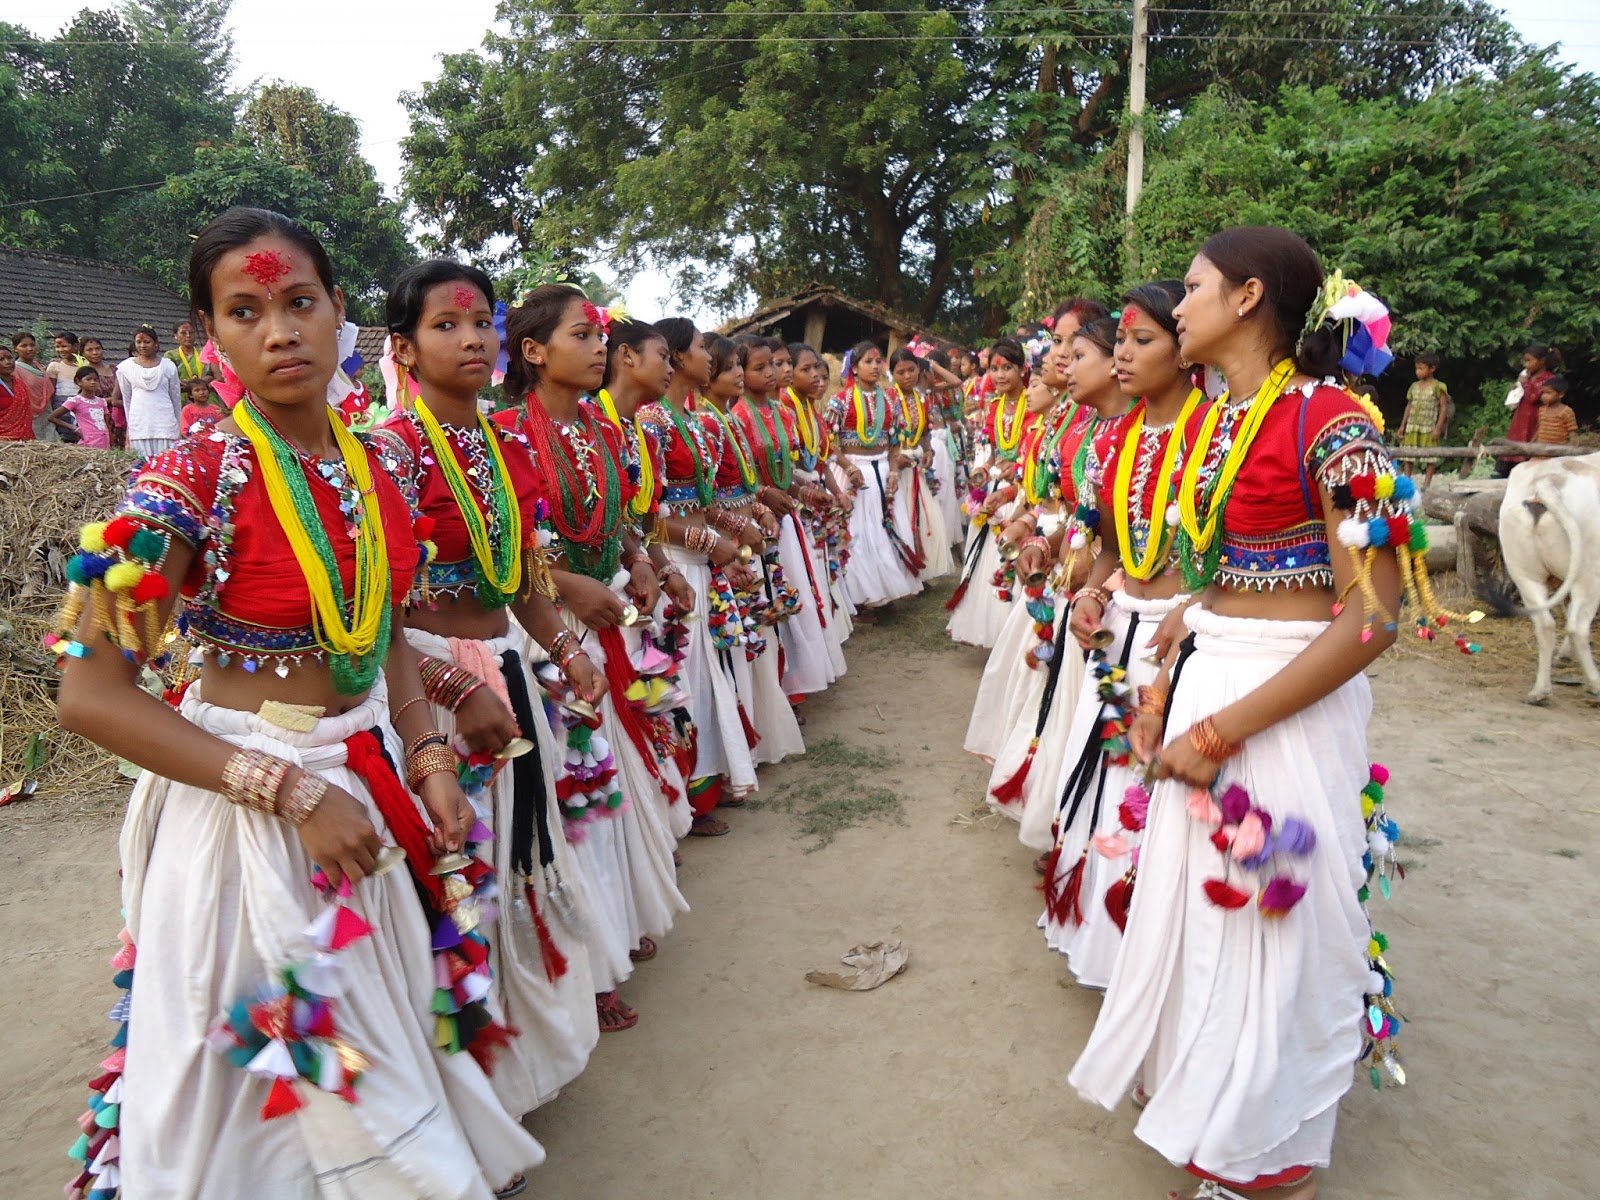 Atawari, festival symbolising family bond begins